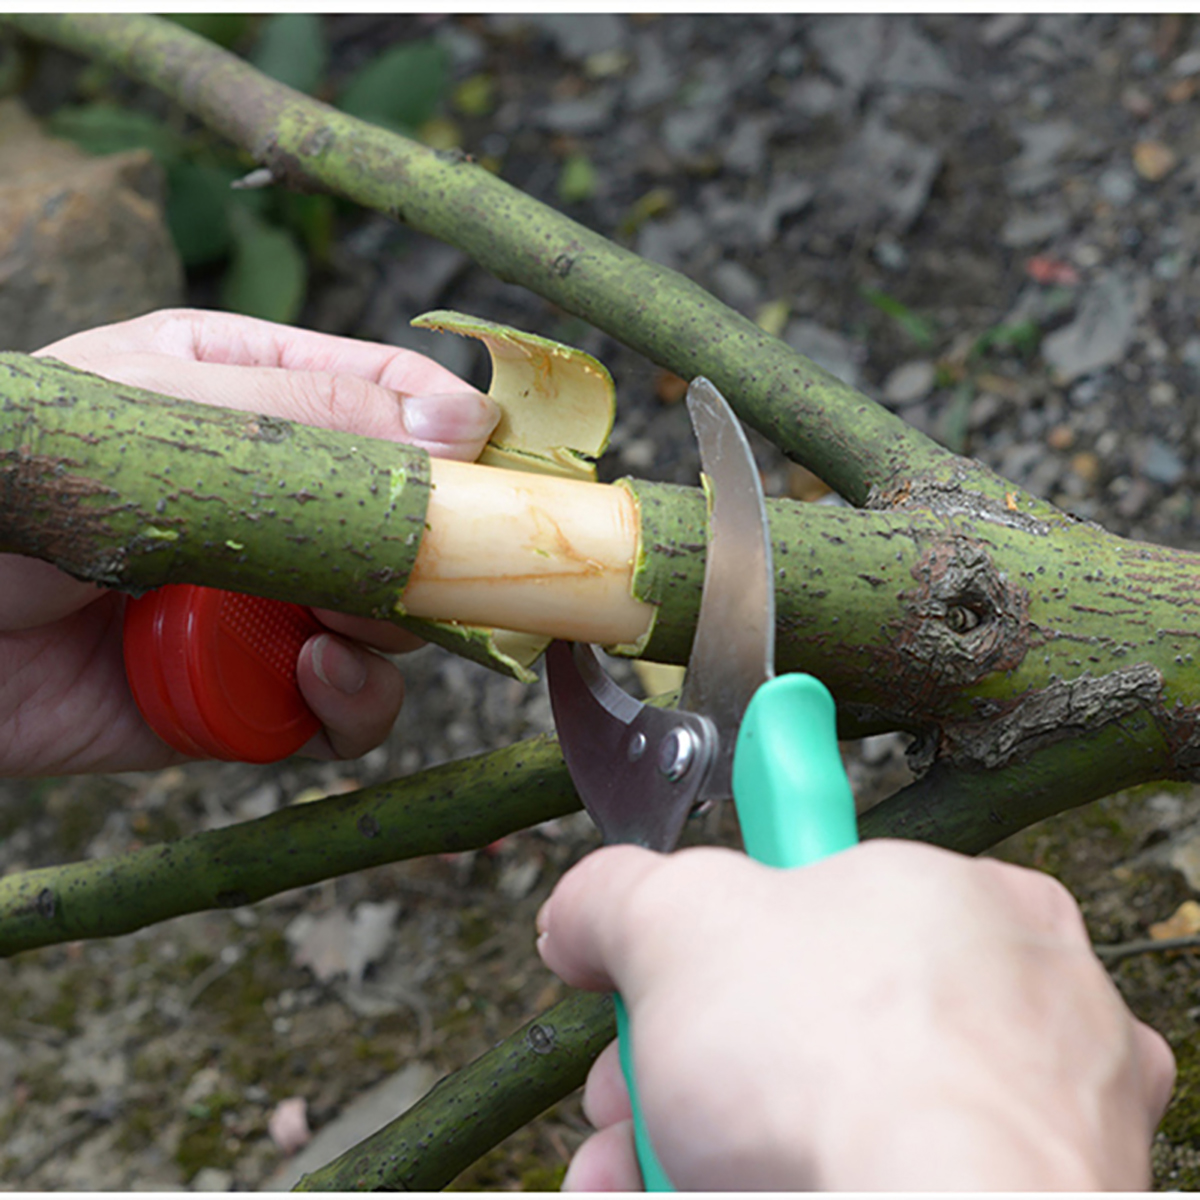 Garden-Grafting-Cut-Tool-Kit-Fruit-Tree-Stainless-Steel-Pruning-Shears-Scissor-1614728